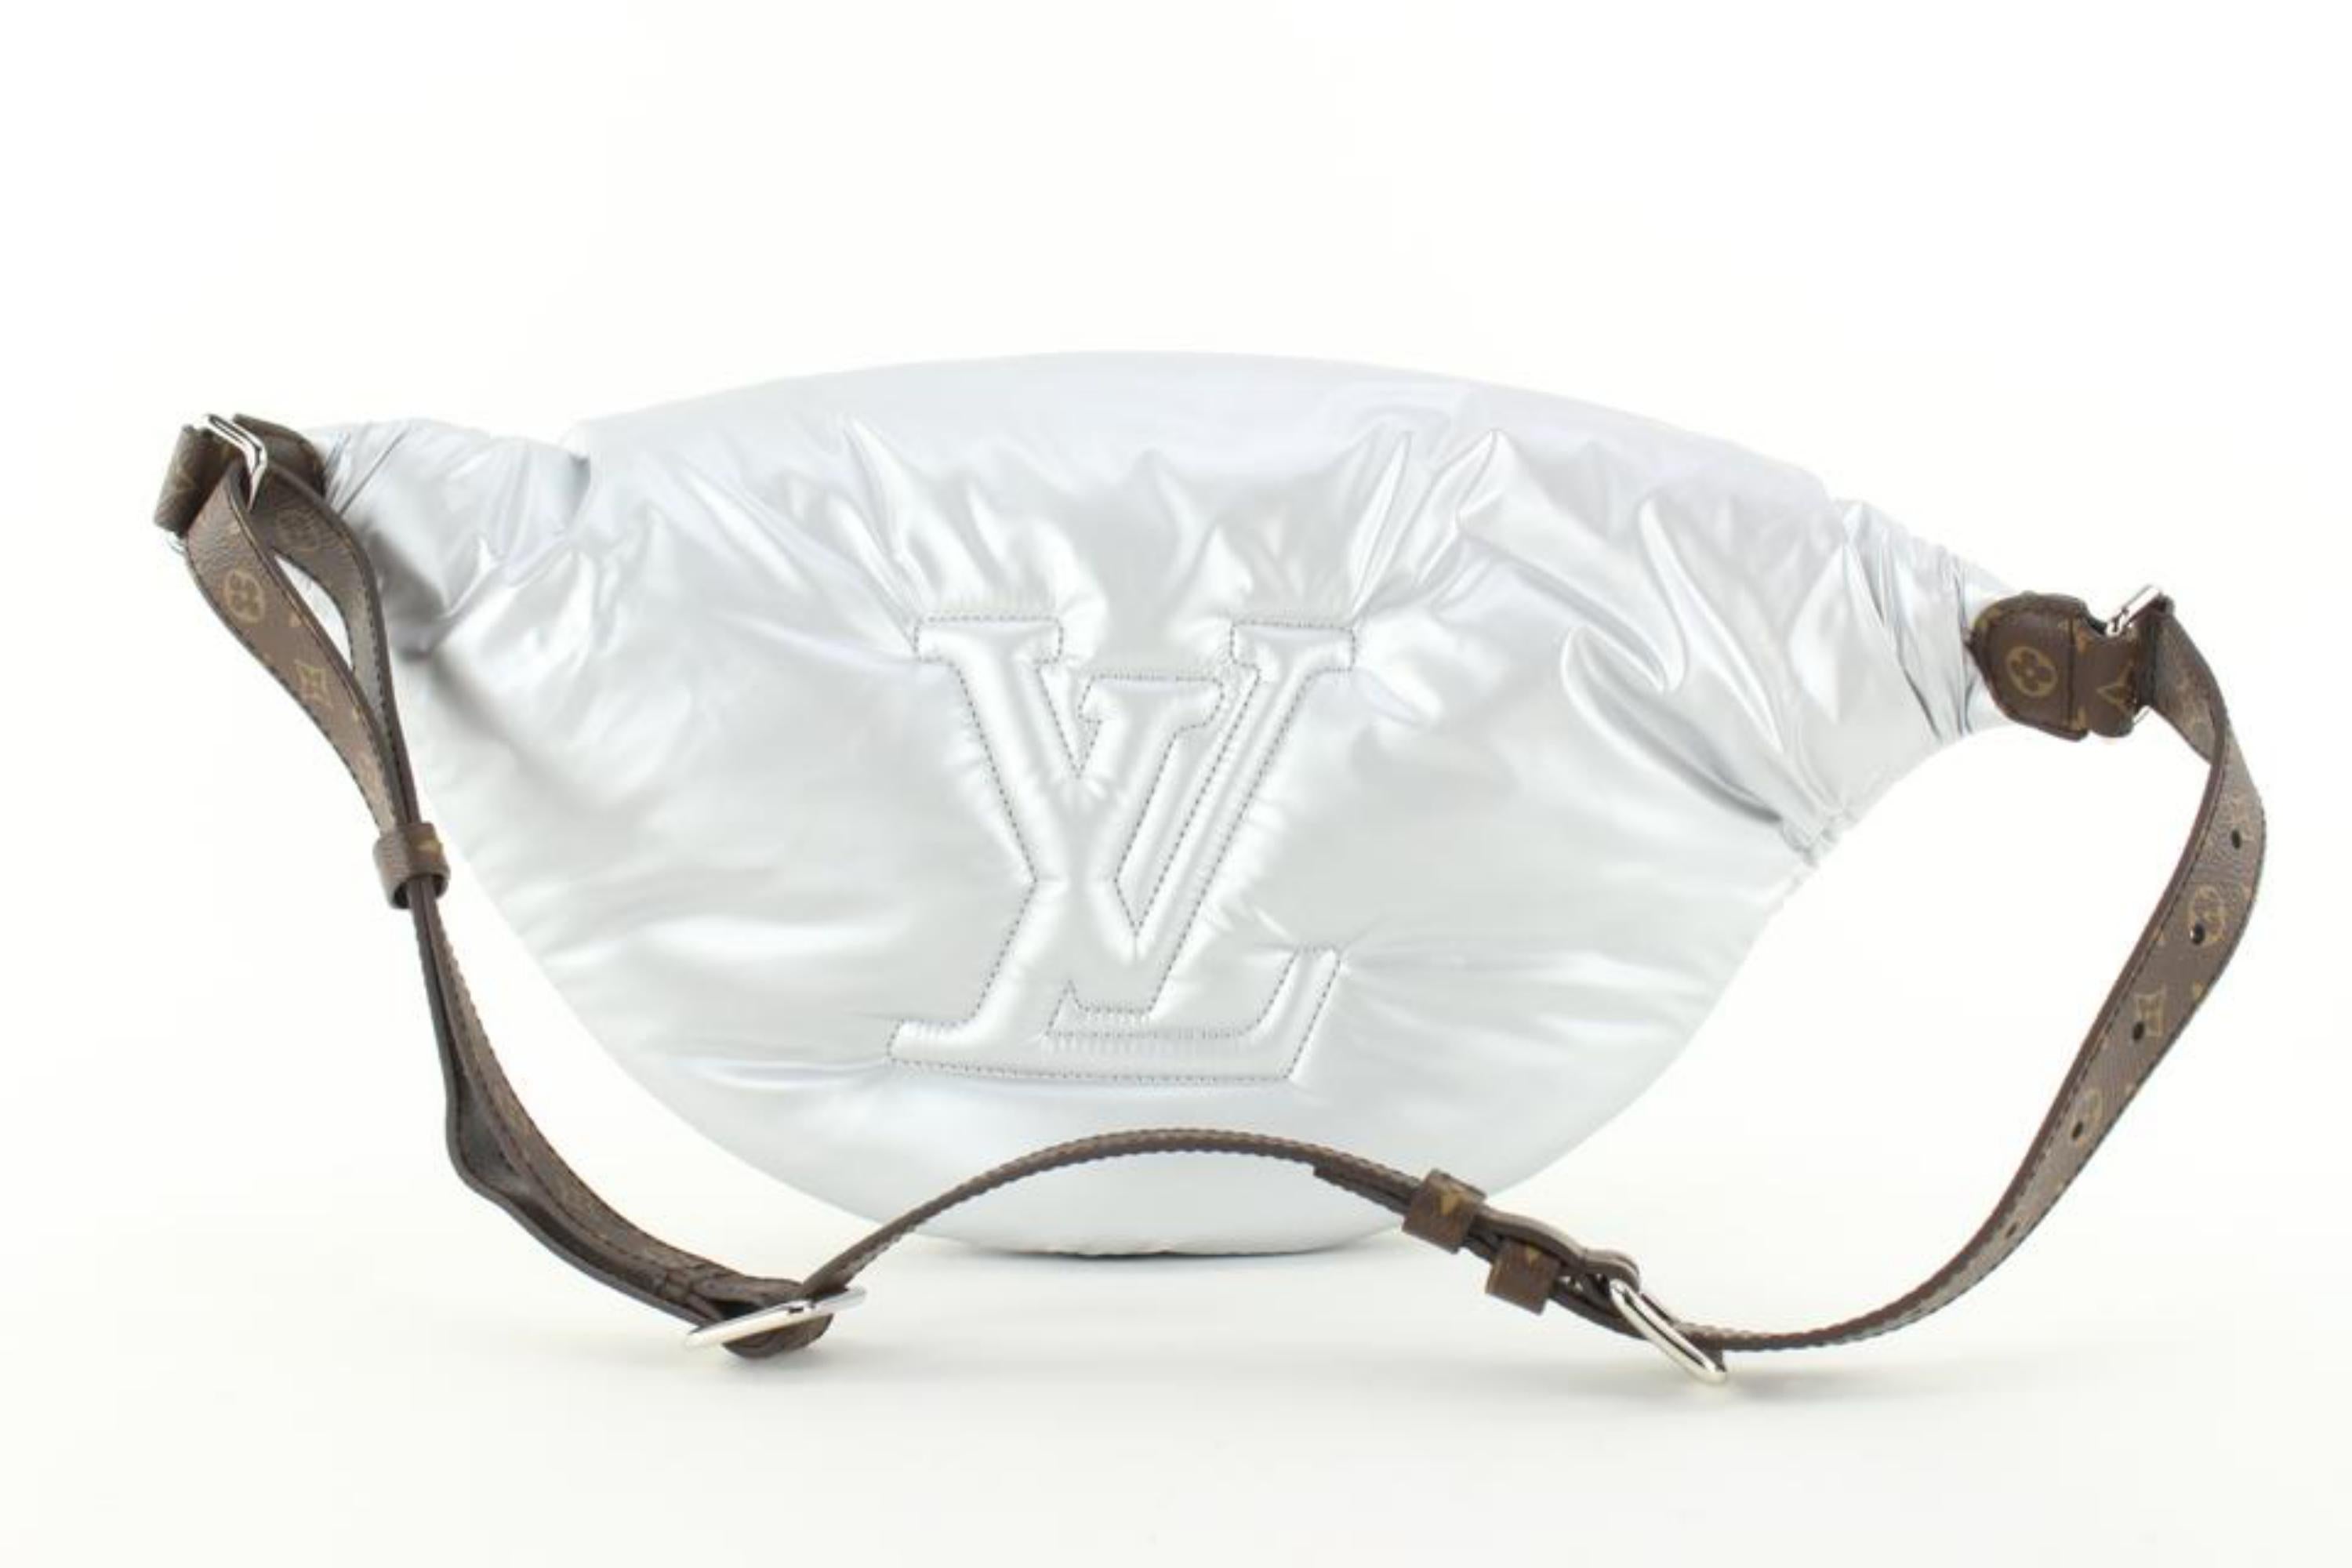 Louis Vuitton Pillow Bag Collection ECONYL